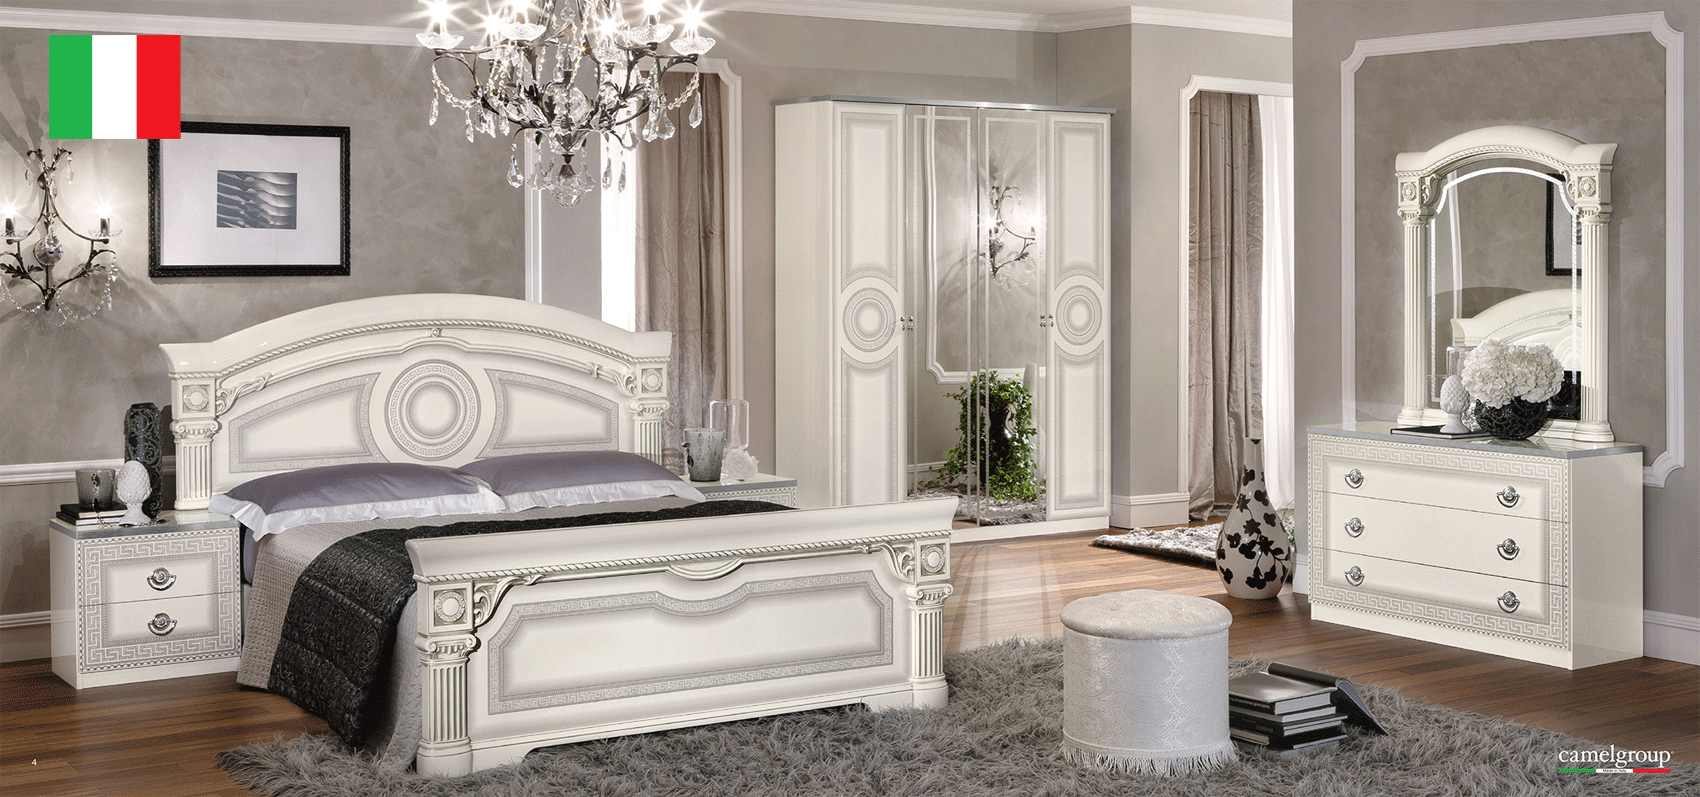 Brands Garcia Sabate, Modern Bedroom Spain Aida Bedroom, White w/Silver, Camelgroup Italy